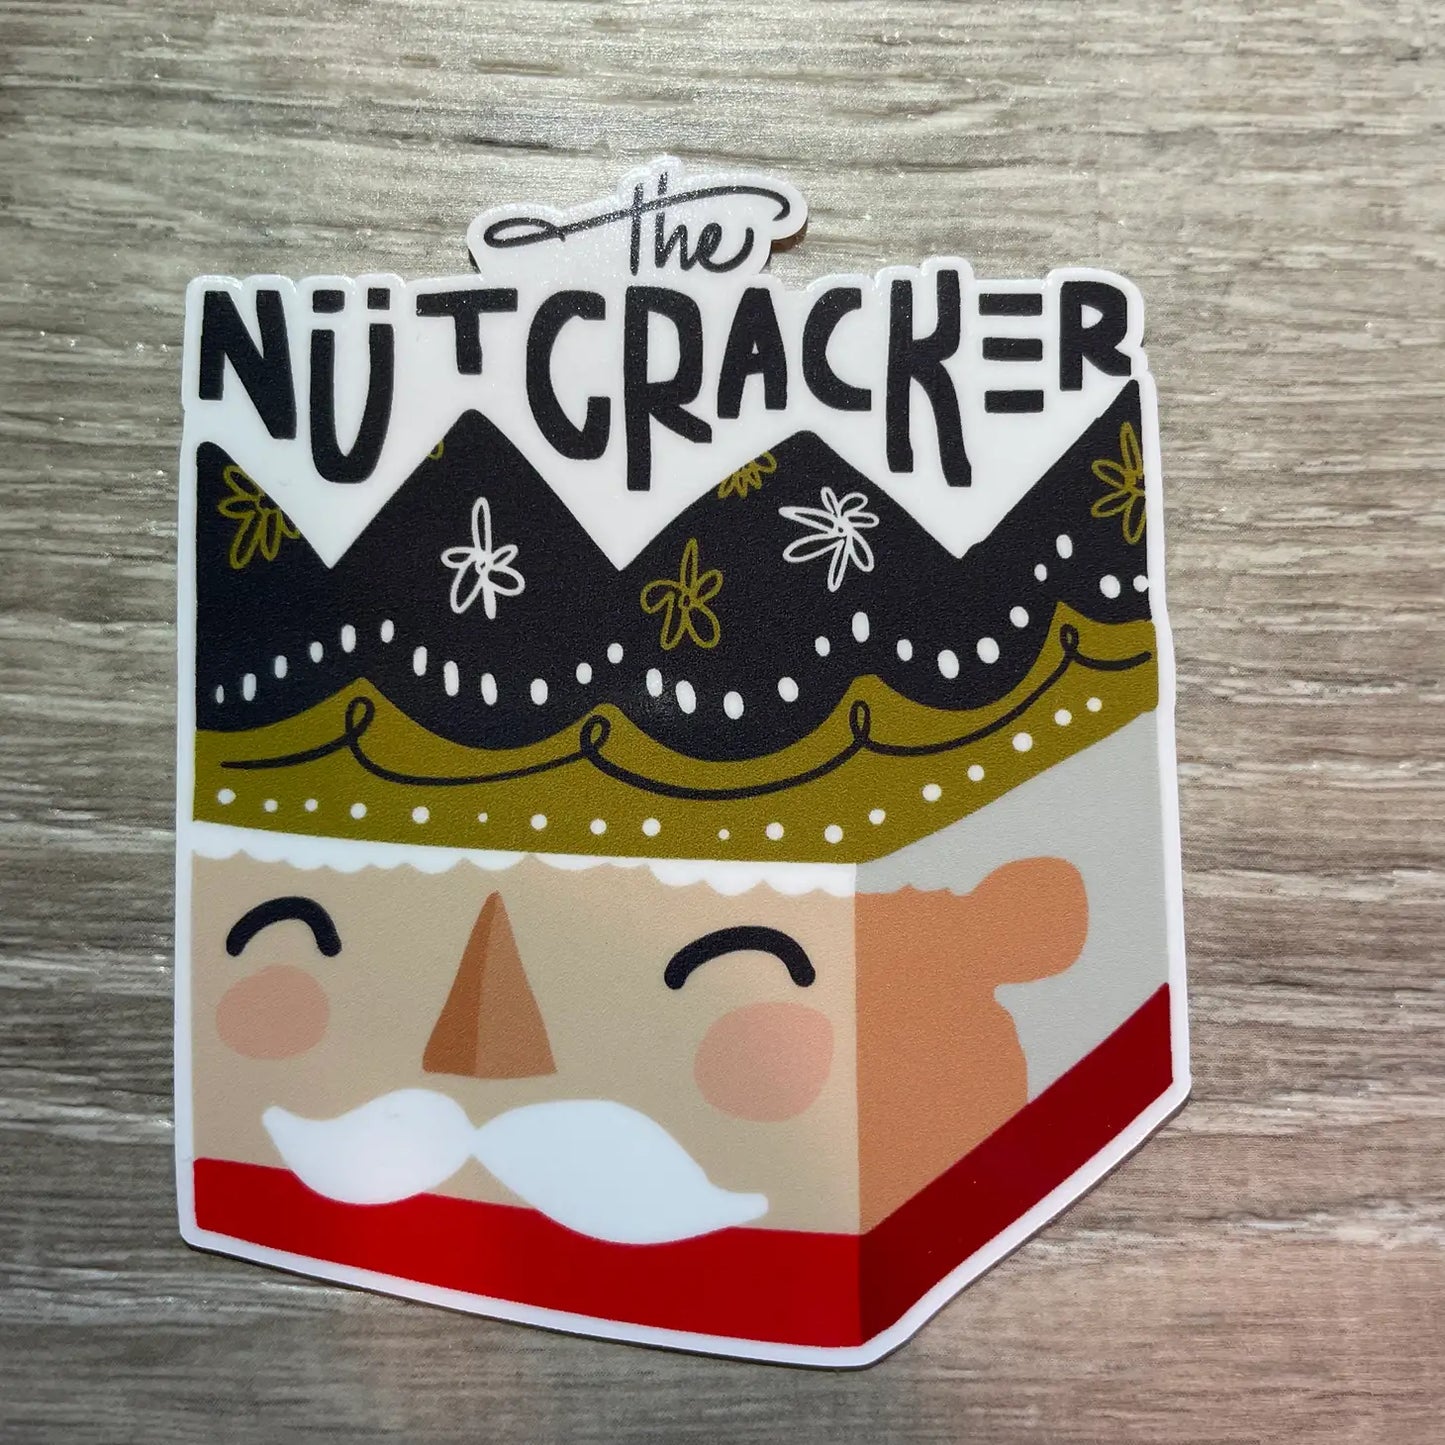 The Nutcracker Vinyl Sticker, 3" x 3"